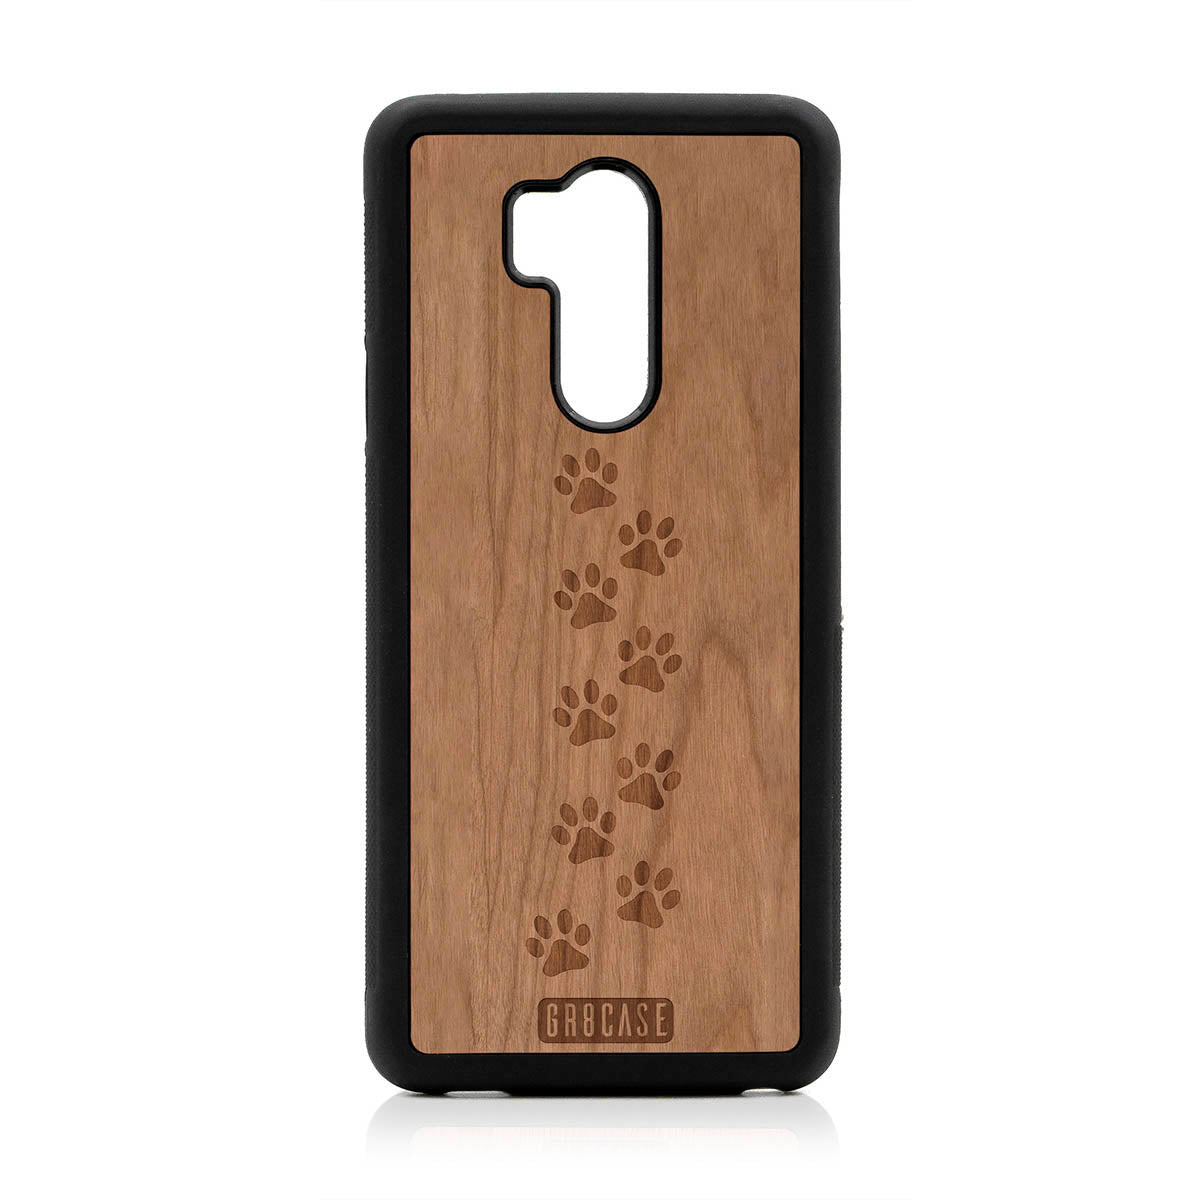 Paw Prints Design Wood Case LG G7 ThinQ by GR8CASE